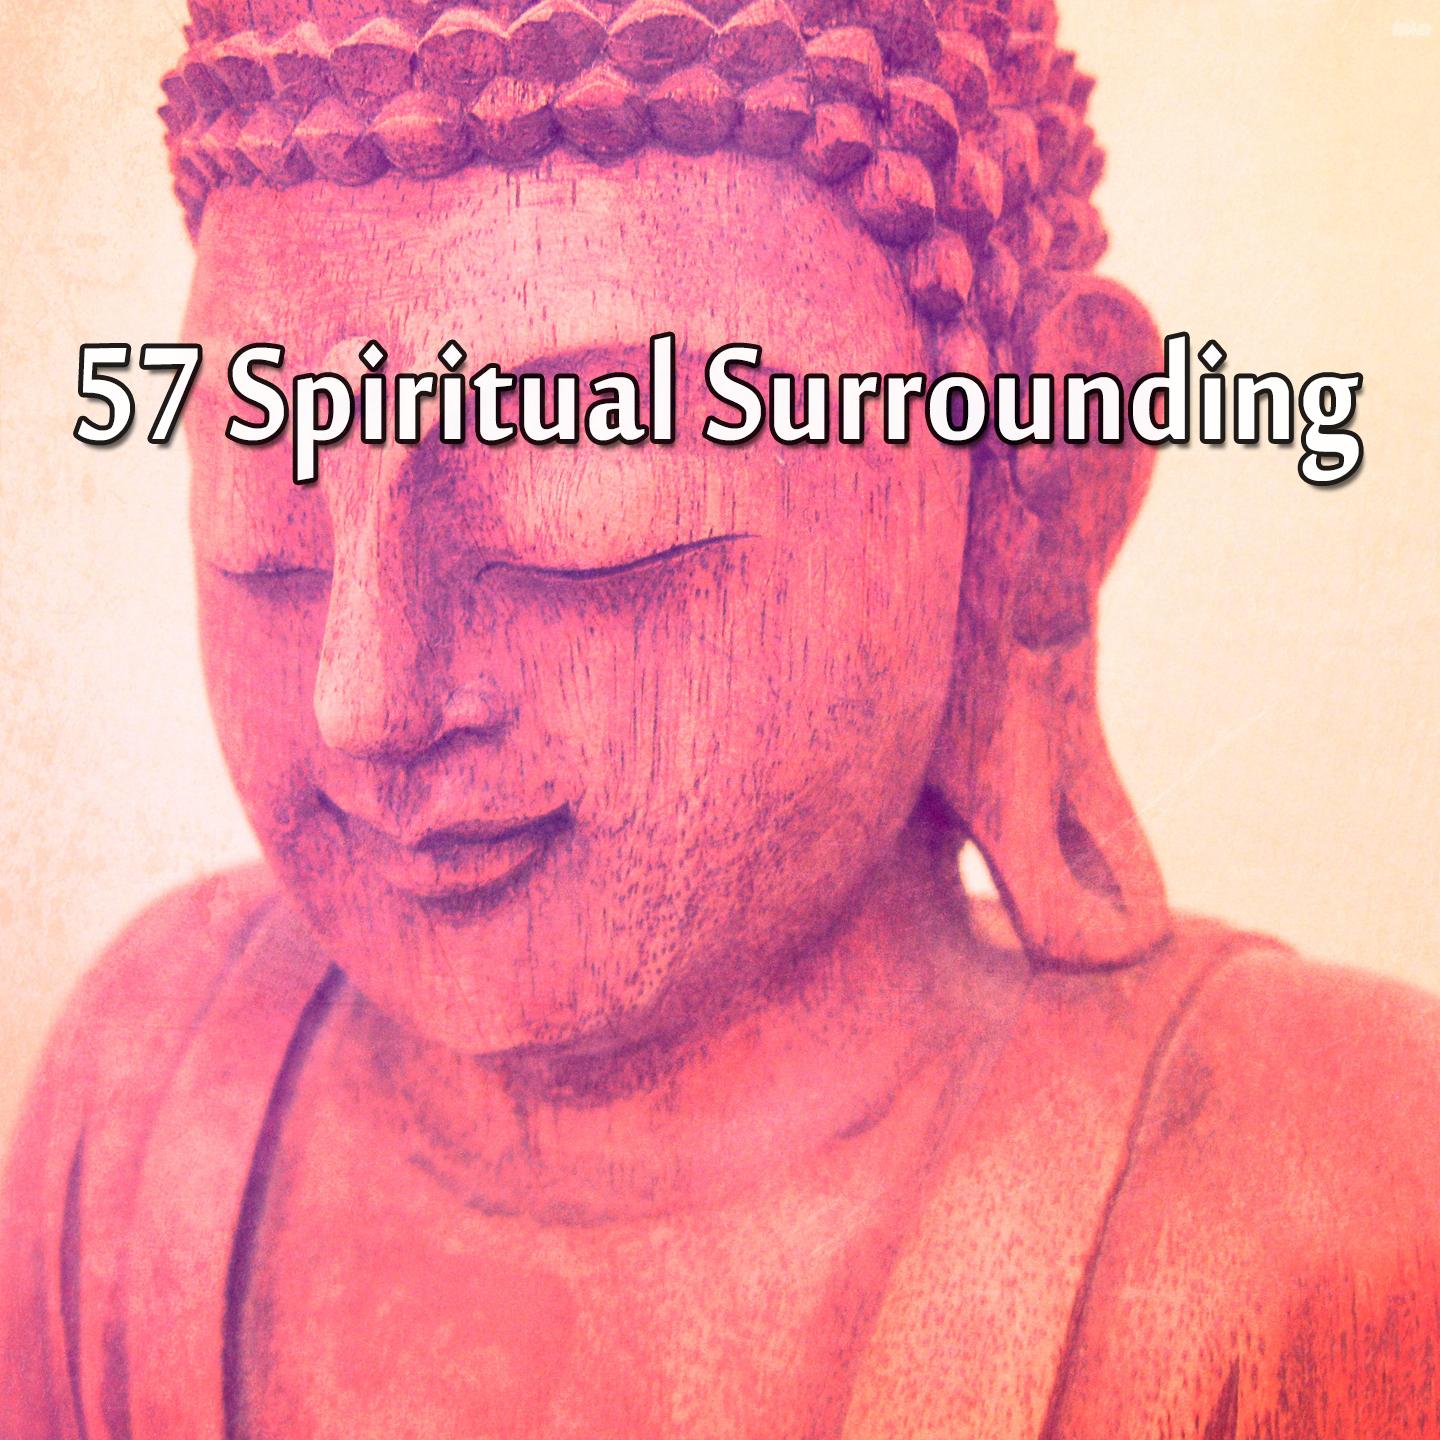 57 Spiritual Surrounding